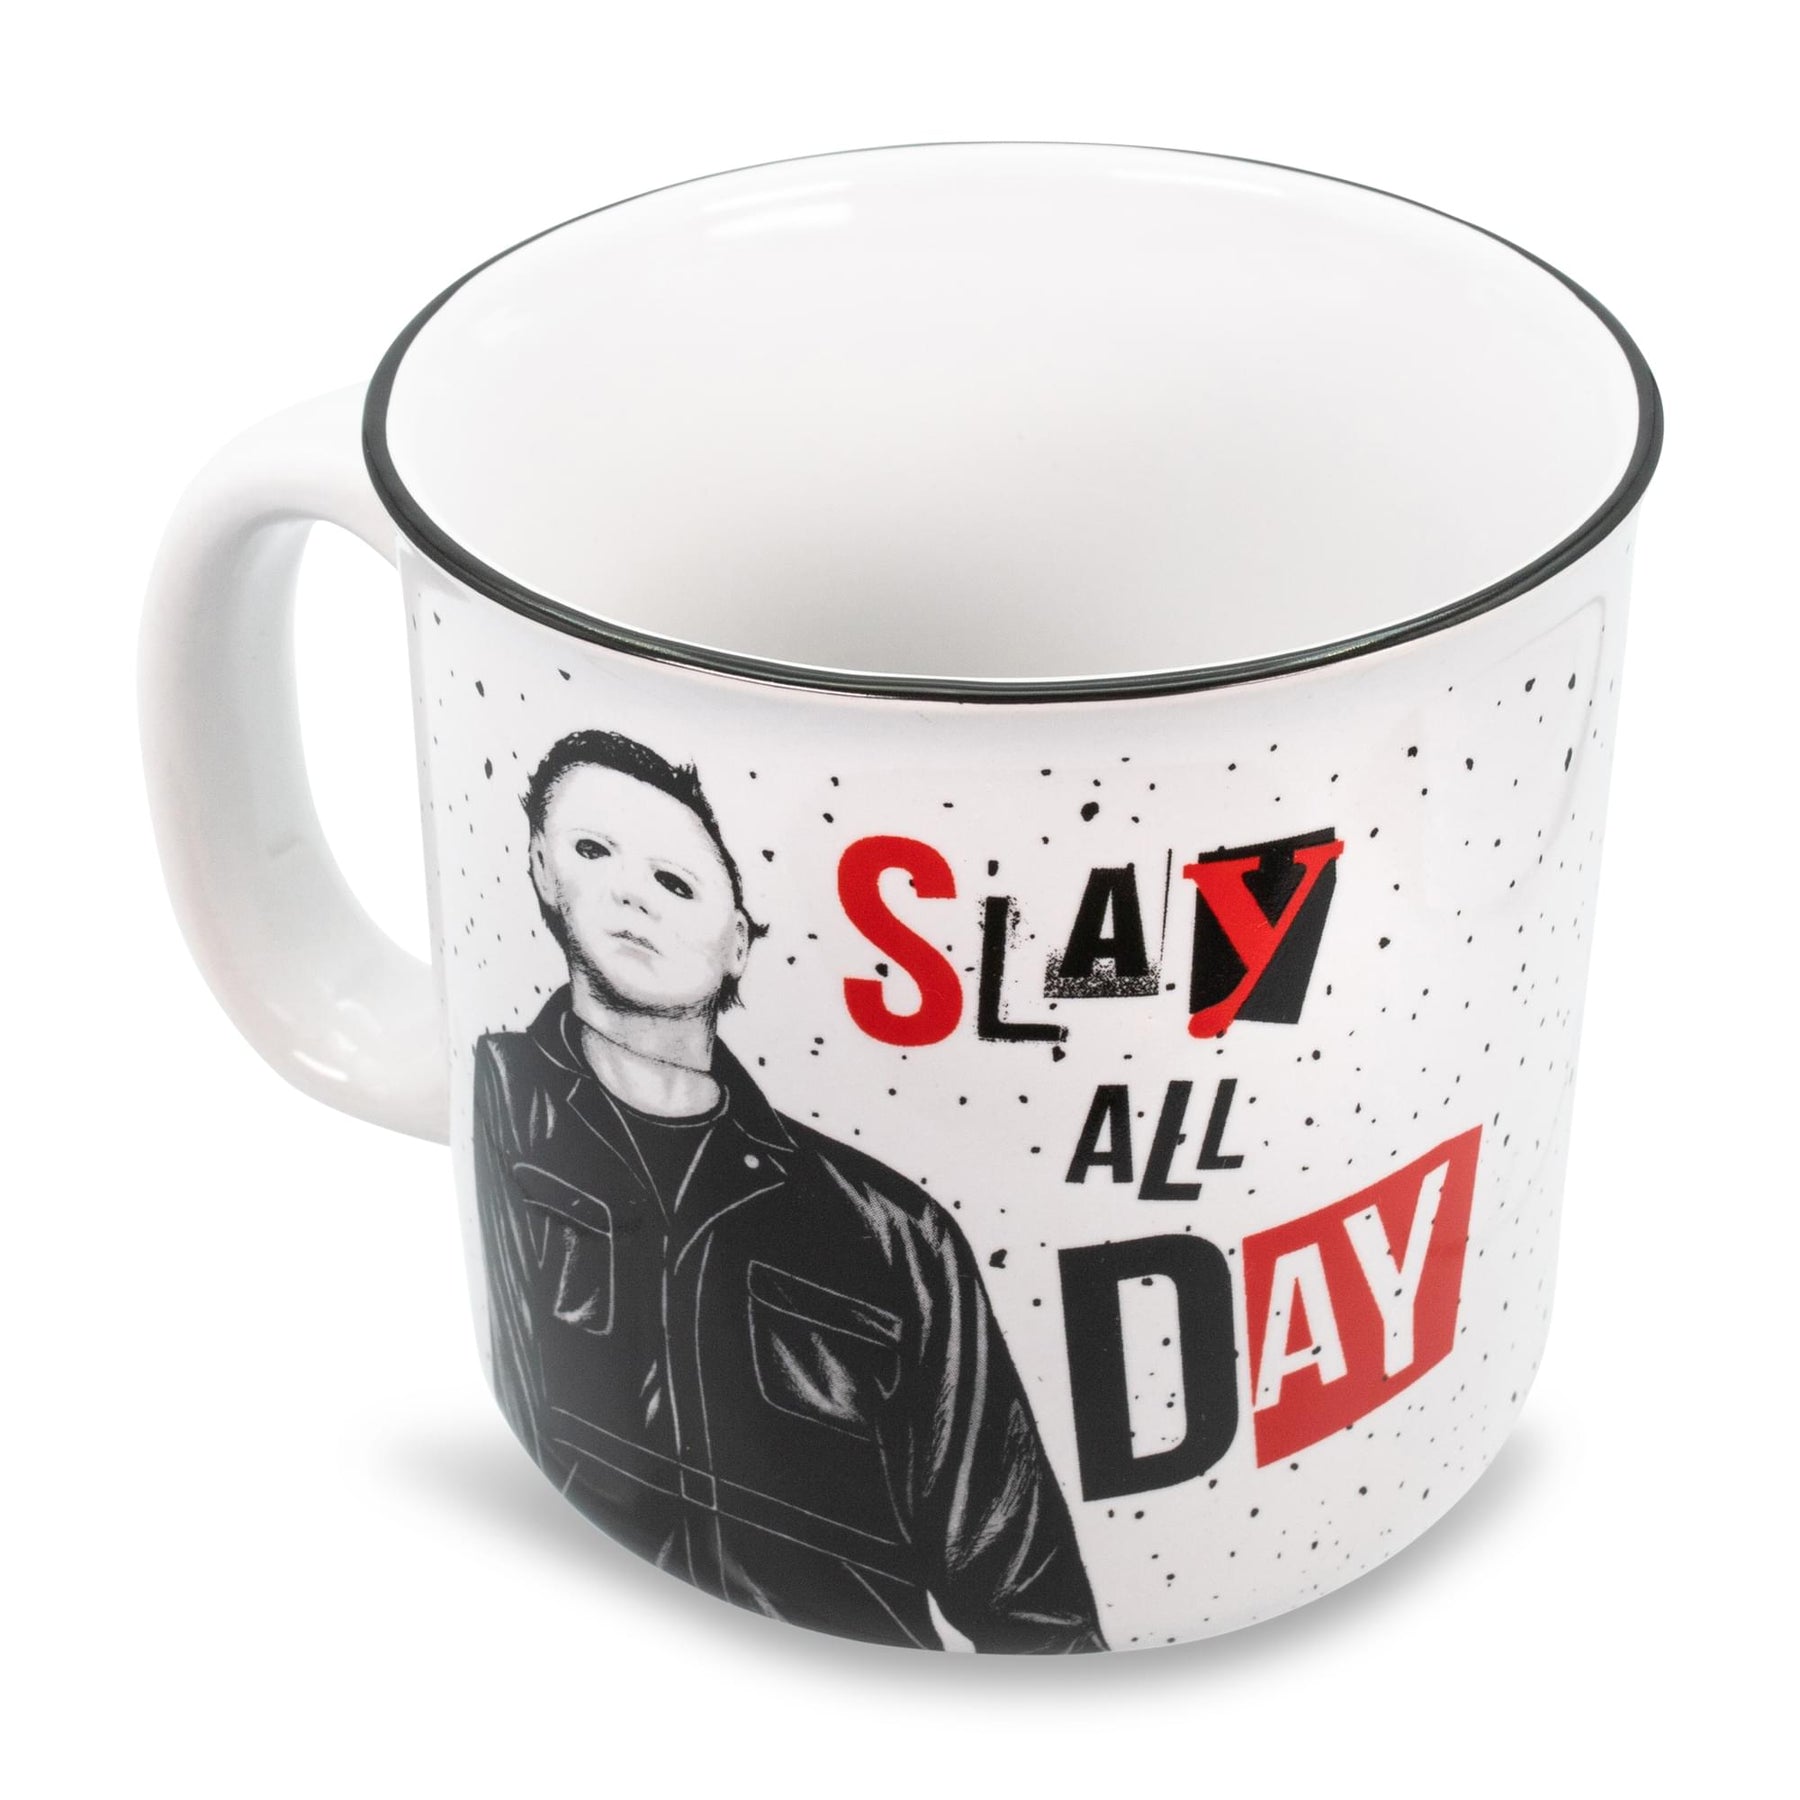 Halloween II "Slay All Day" Ceramic Camper Mug | Holds 20 Ounces